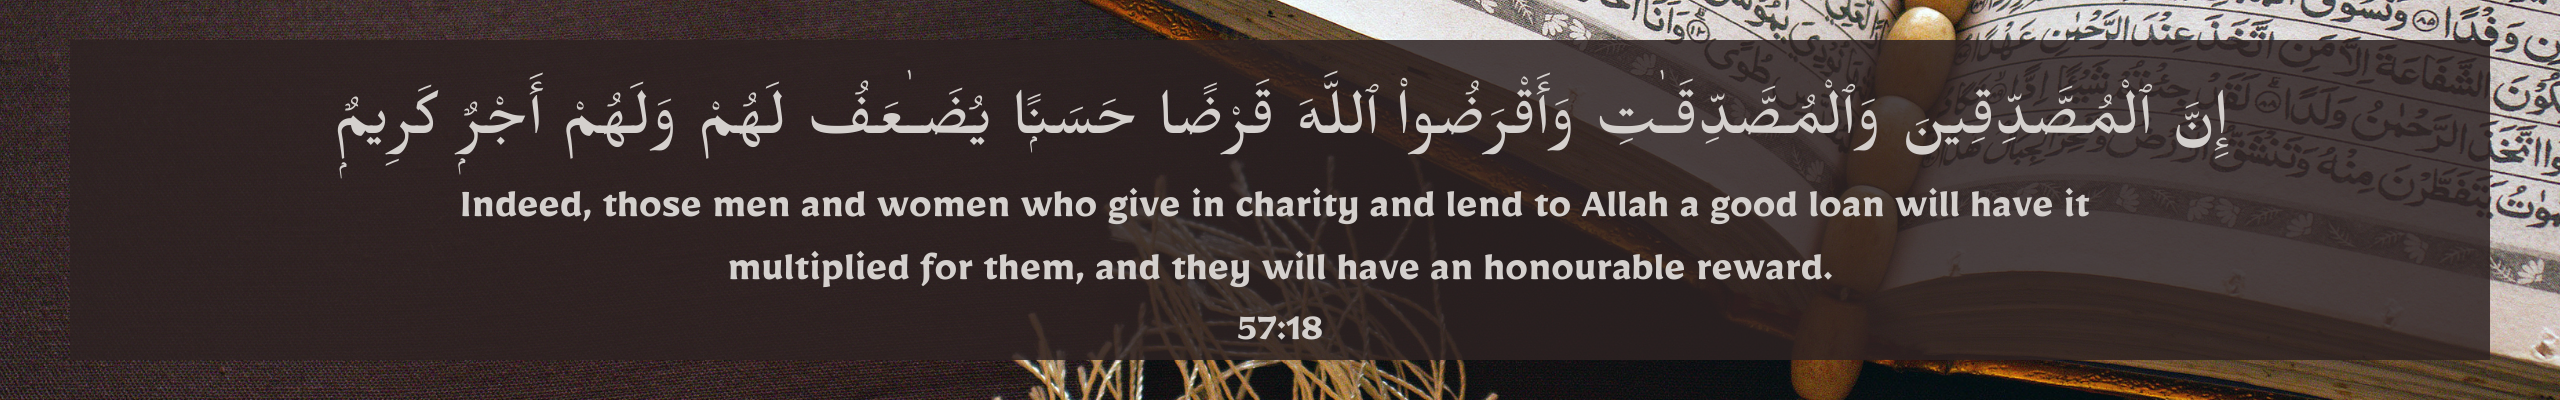 verse-on-donation